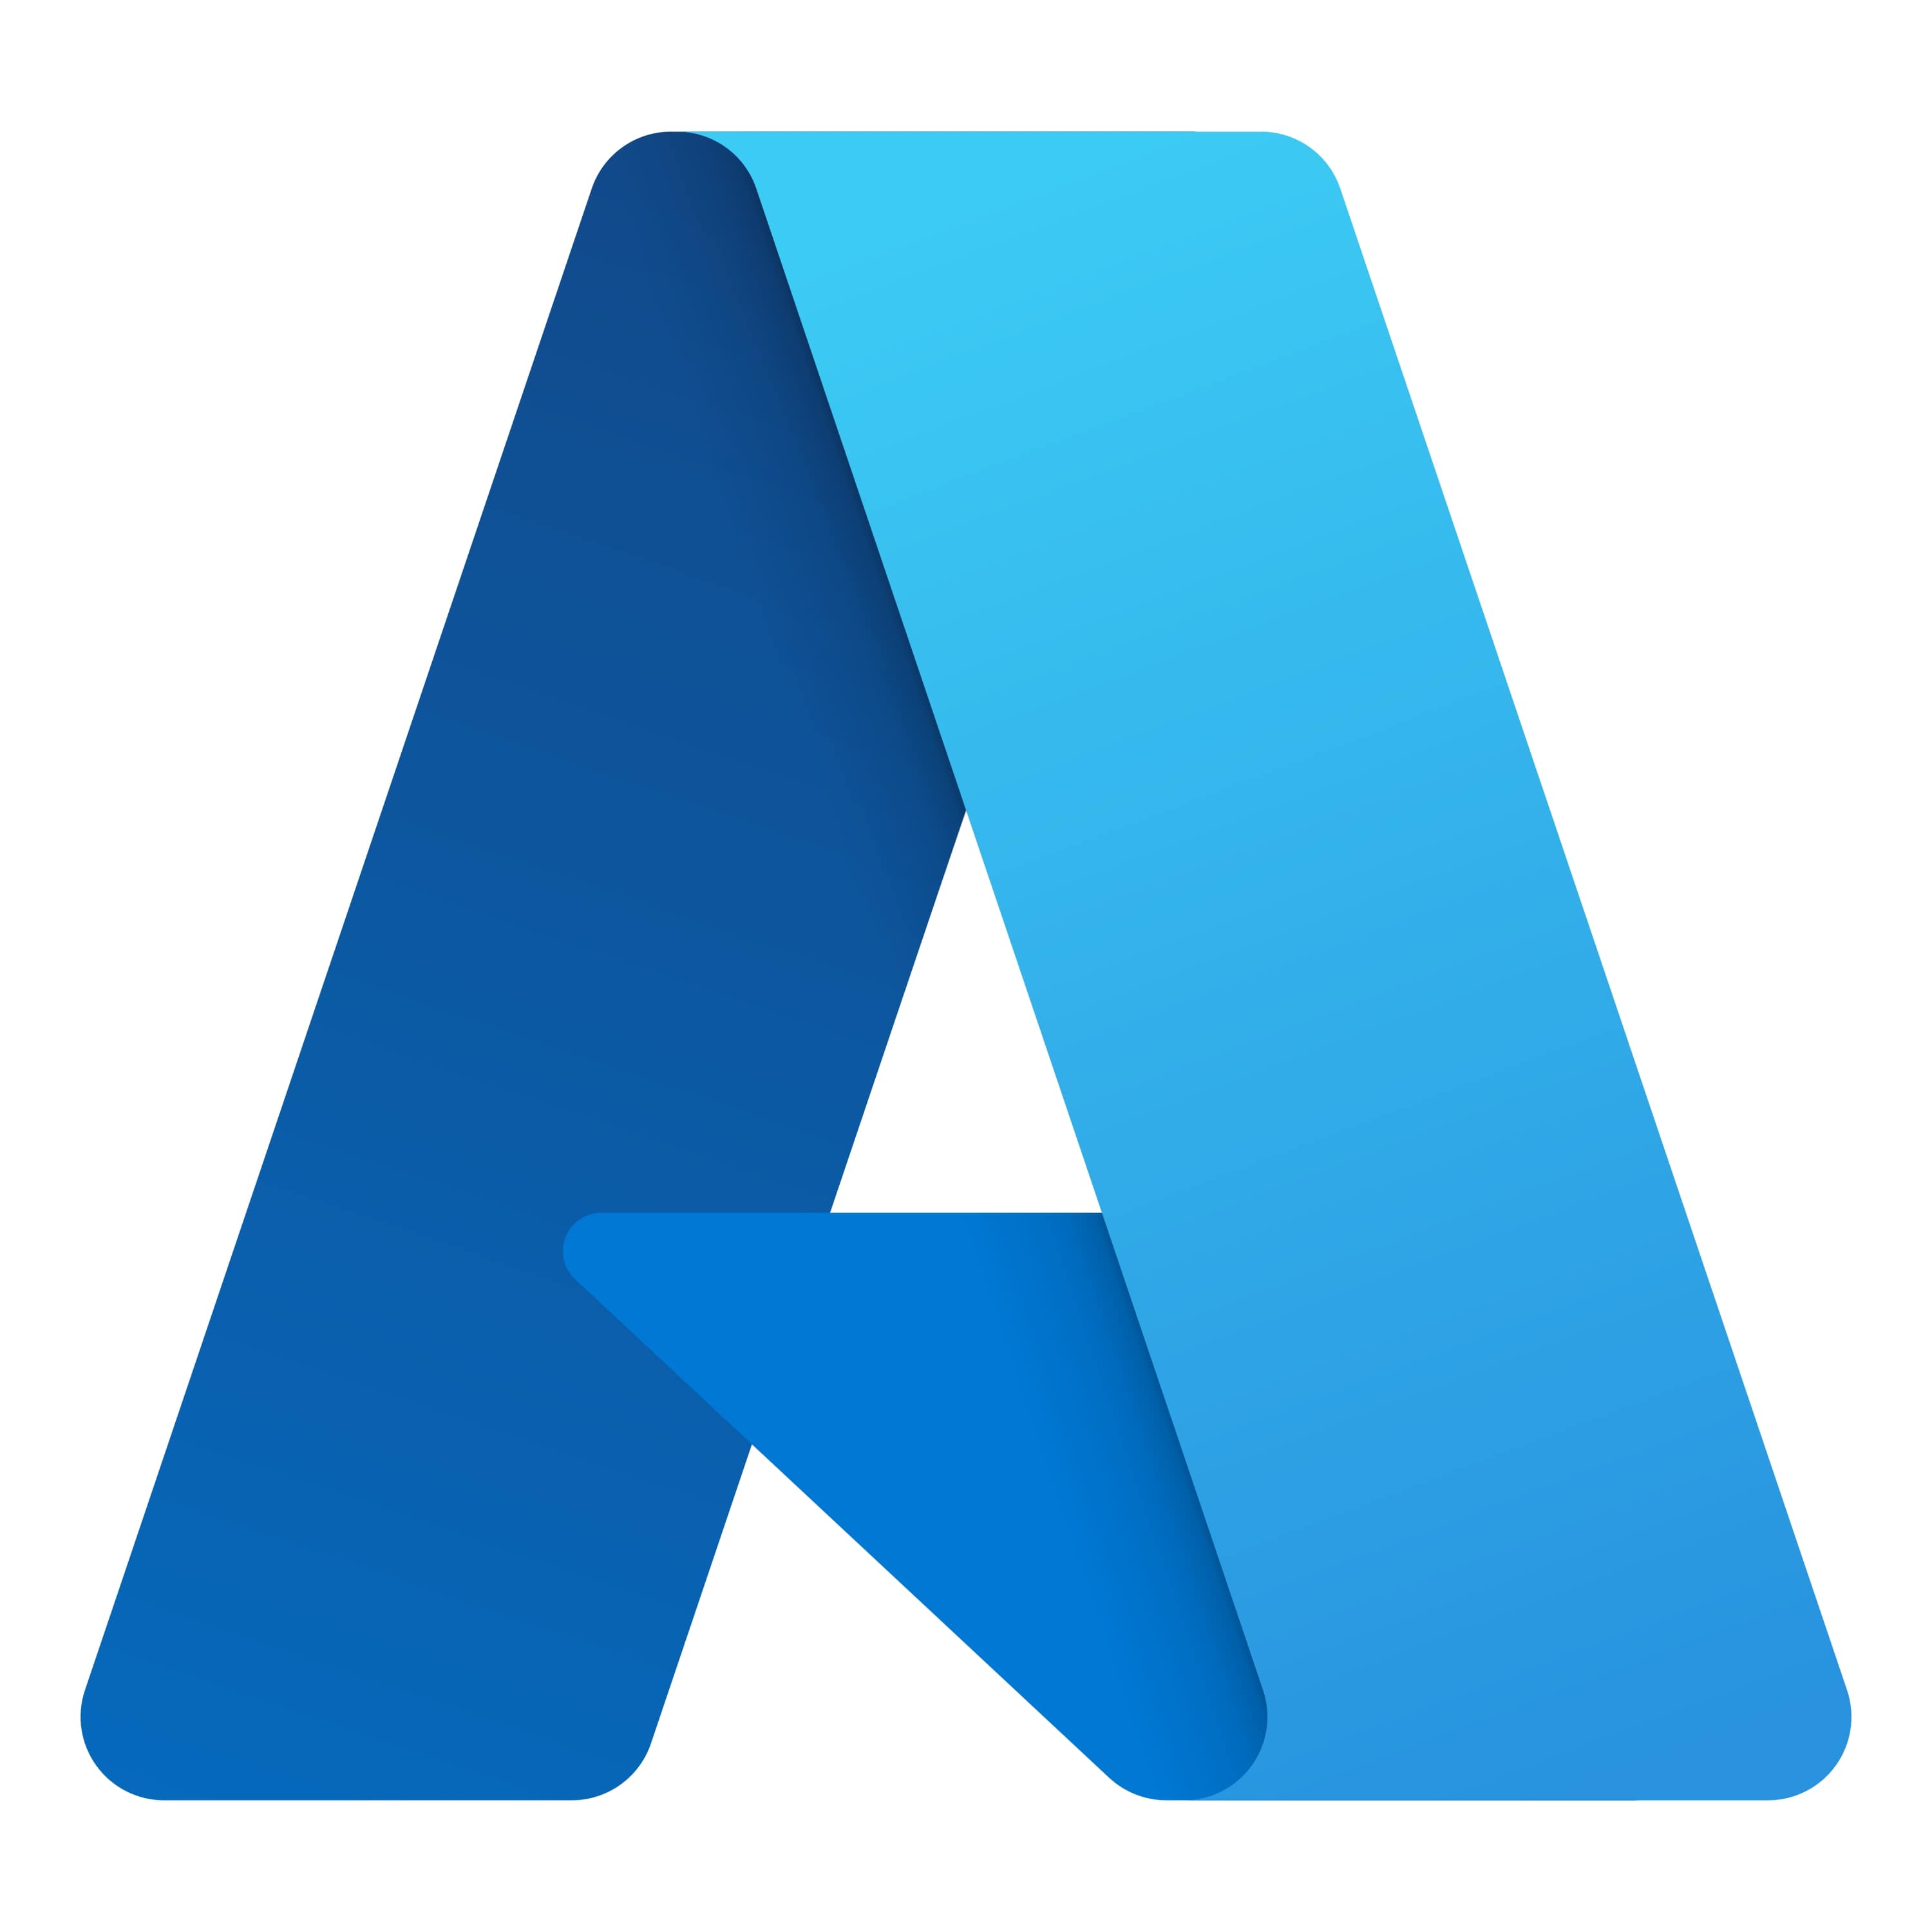 Azure Logo as JPEG file in high resolution